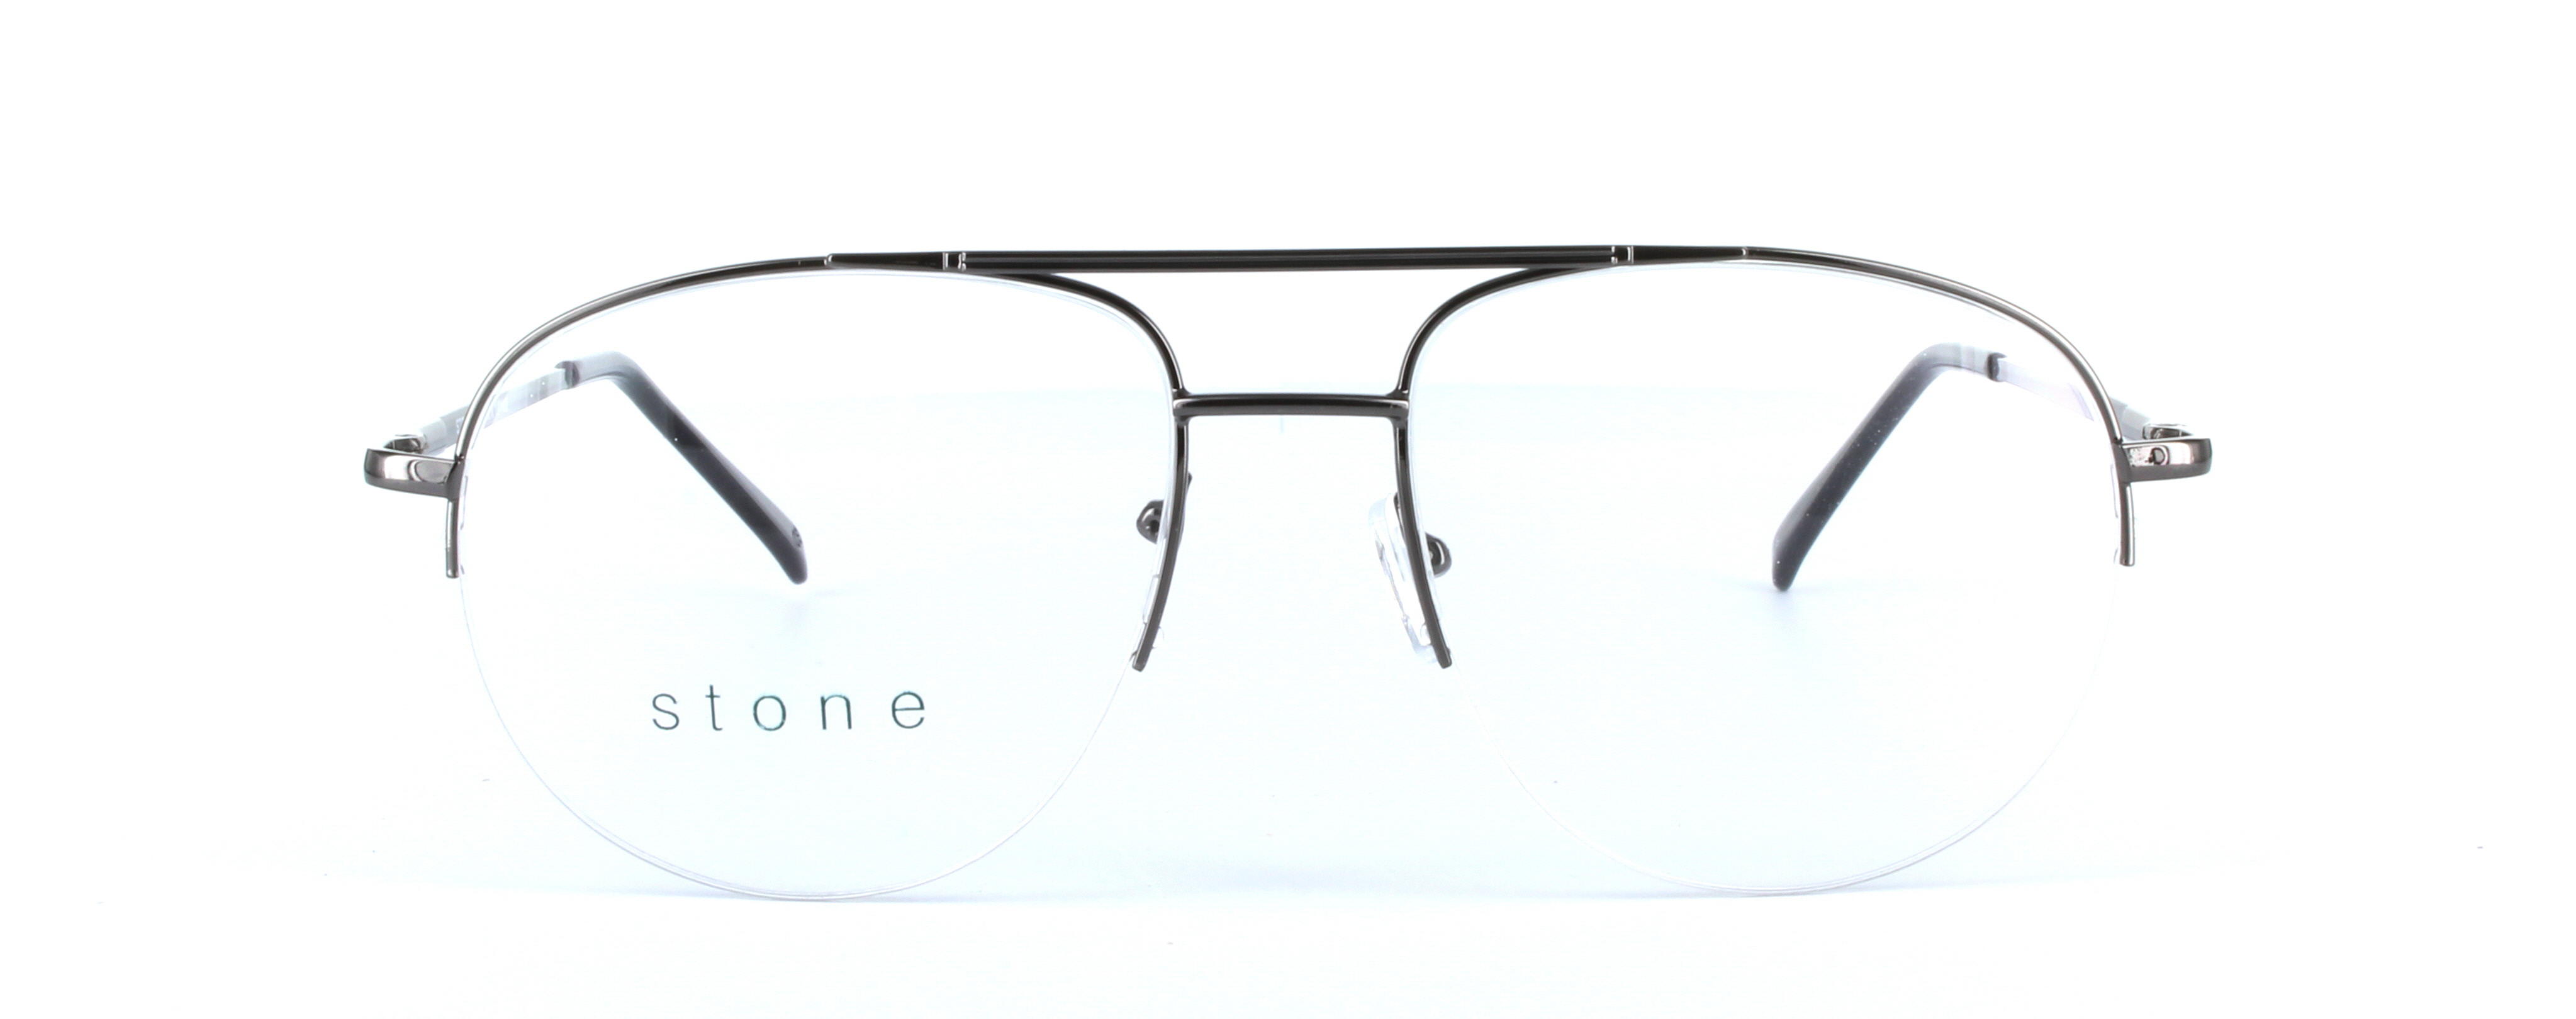 Aviator Style Semi-Rimless Glasses 